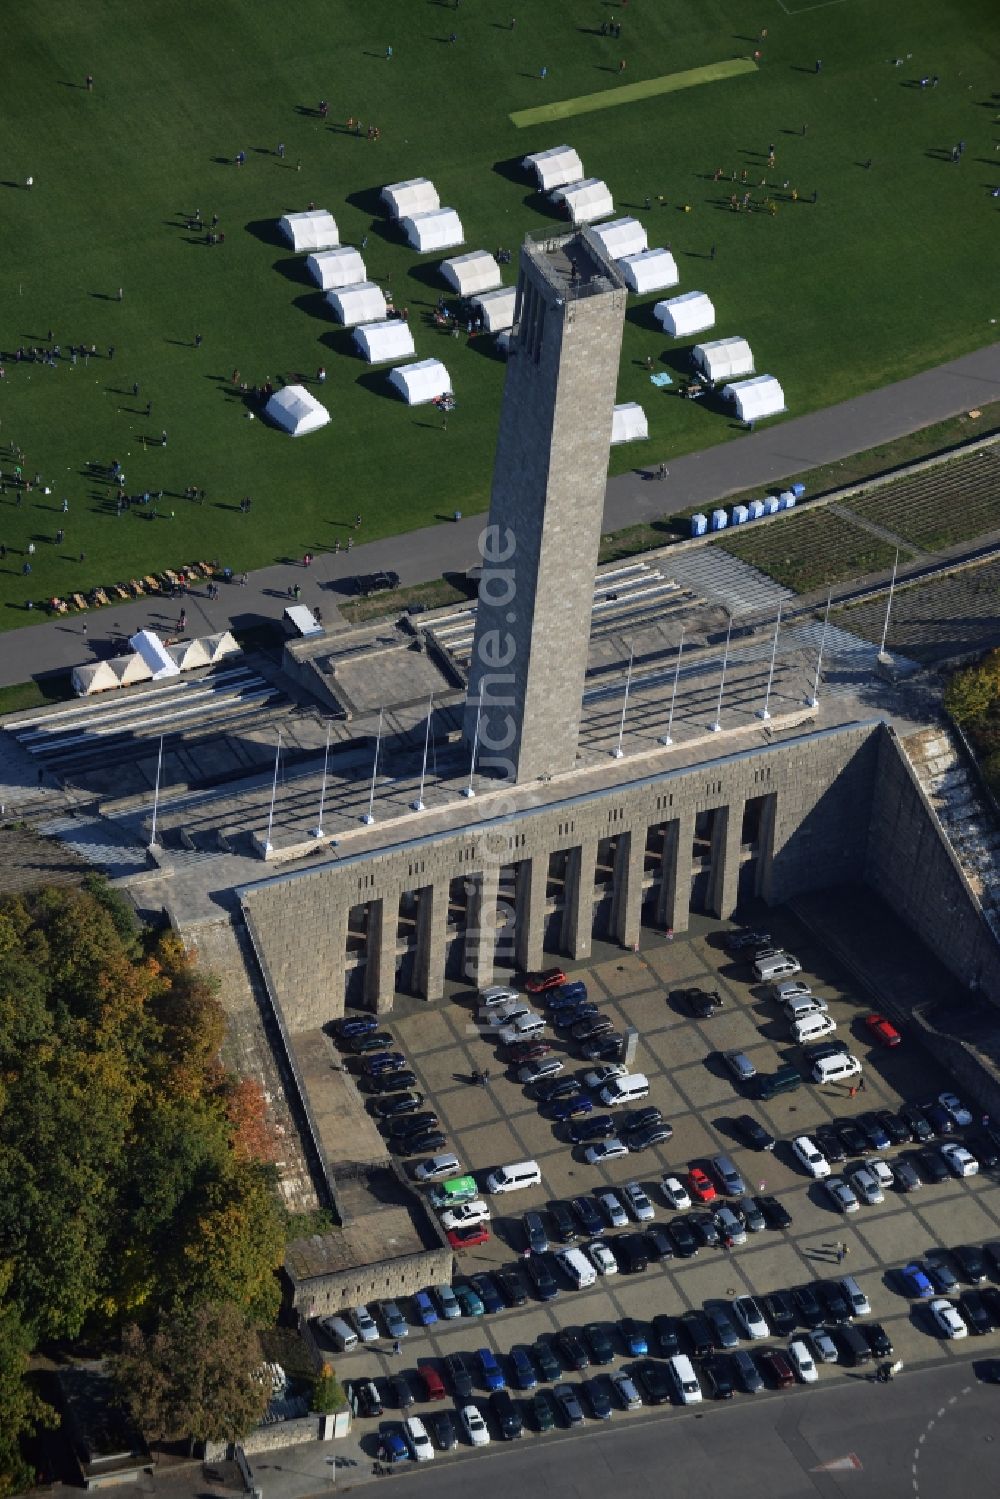 Berlin von oben - Bauwerk des Aussichtsturmes Glockenturm in Berlin